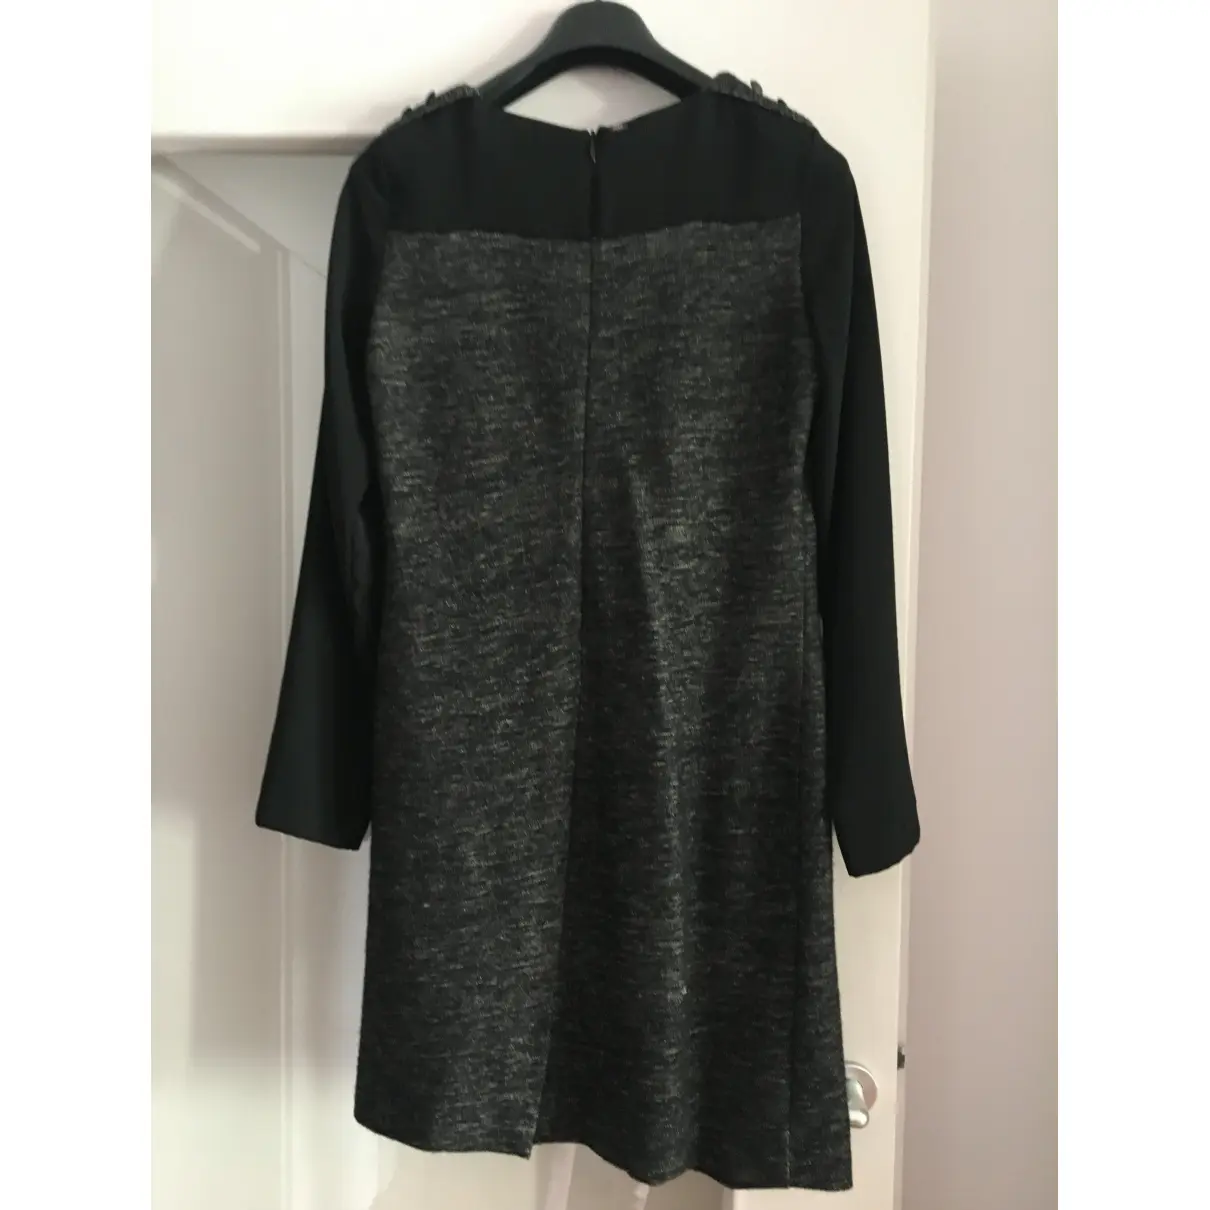 Buy Ikks Wool mid-length dress online